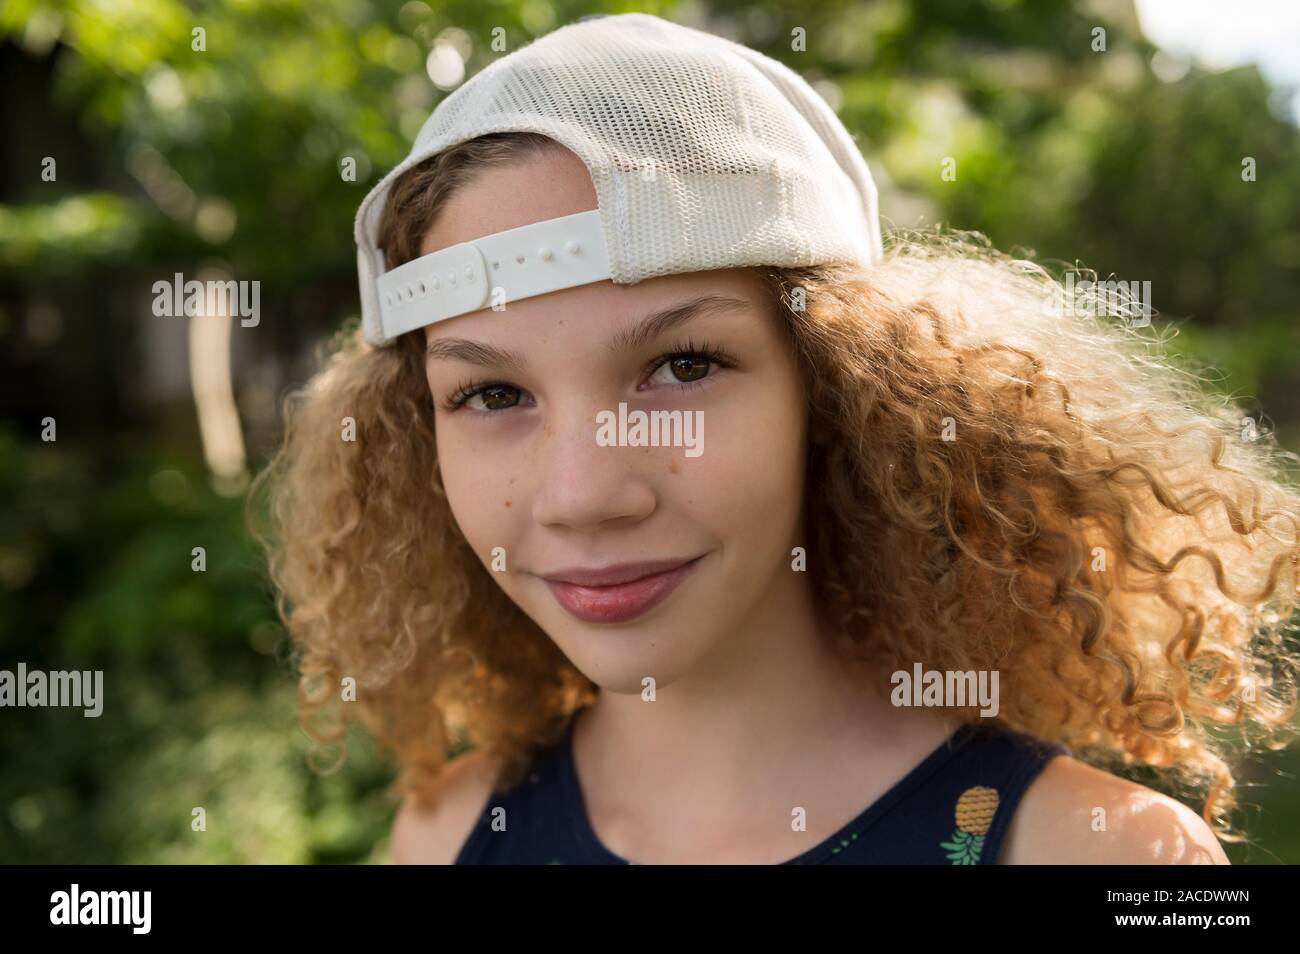 Girl wearing baseball cap Stock Photo